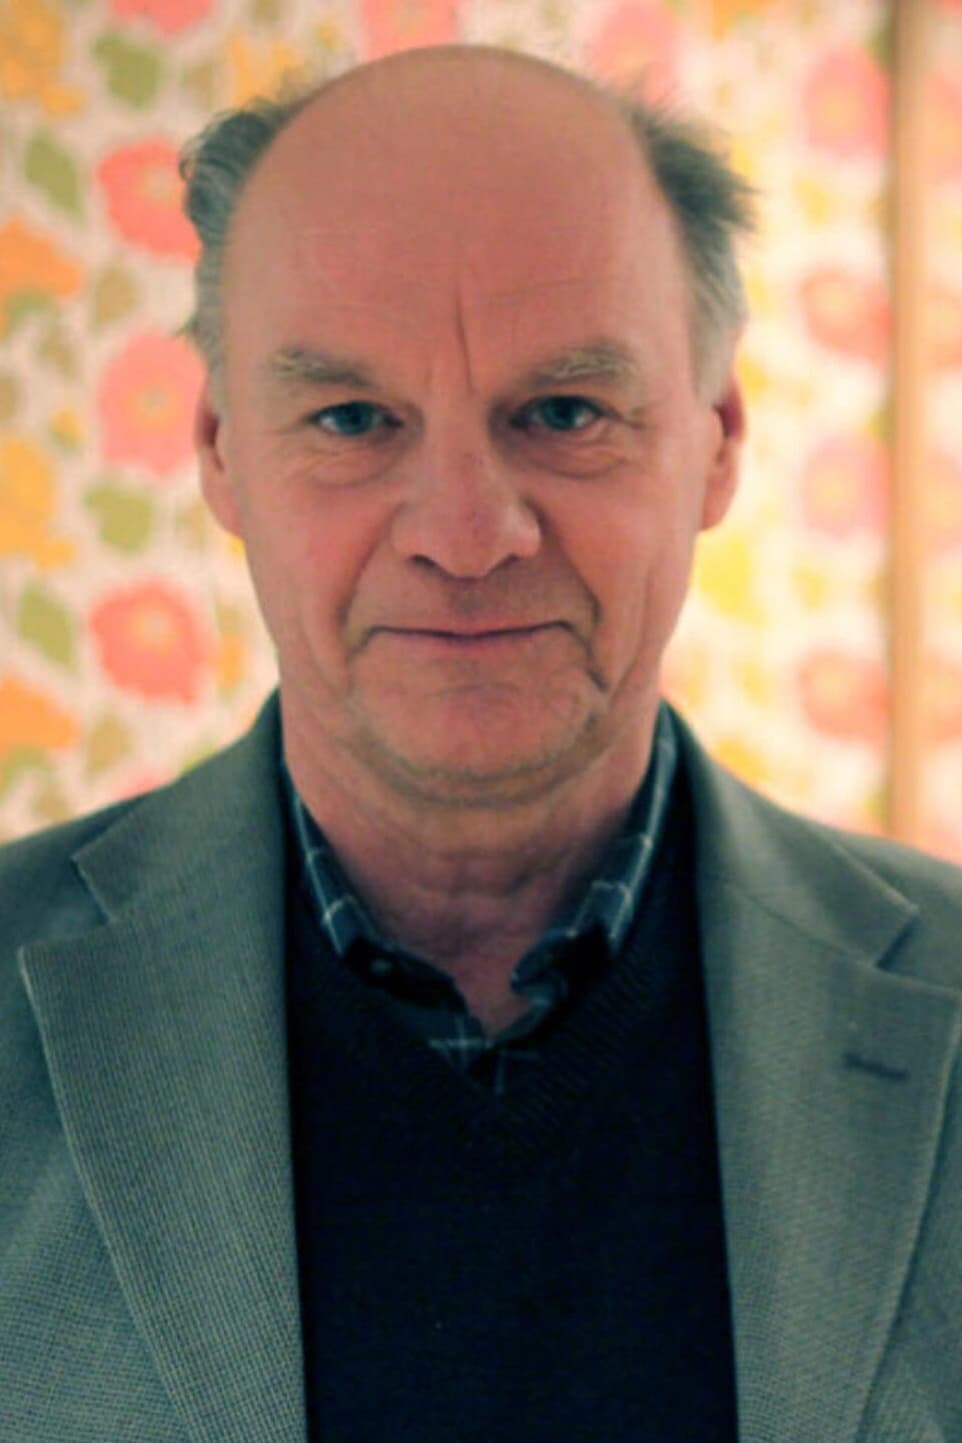 Donald Högberg | Appelqvist, the secret police